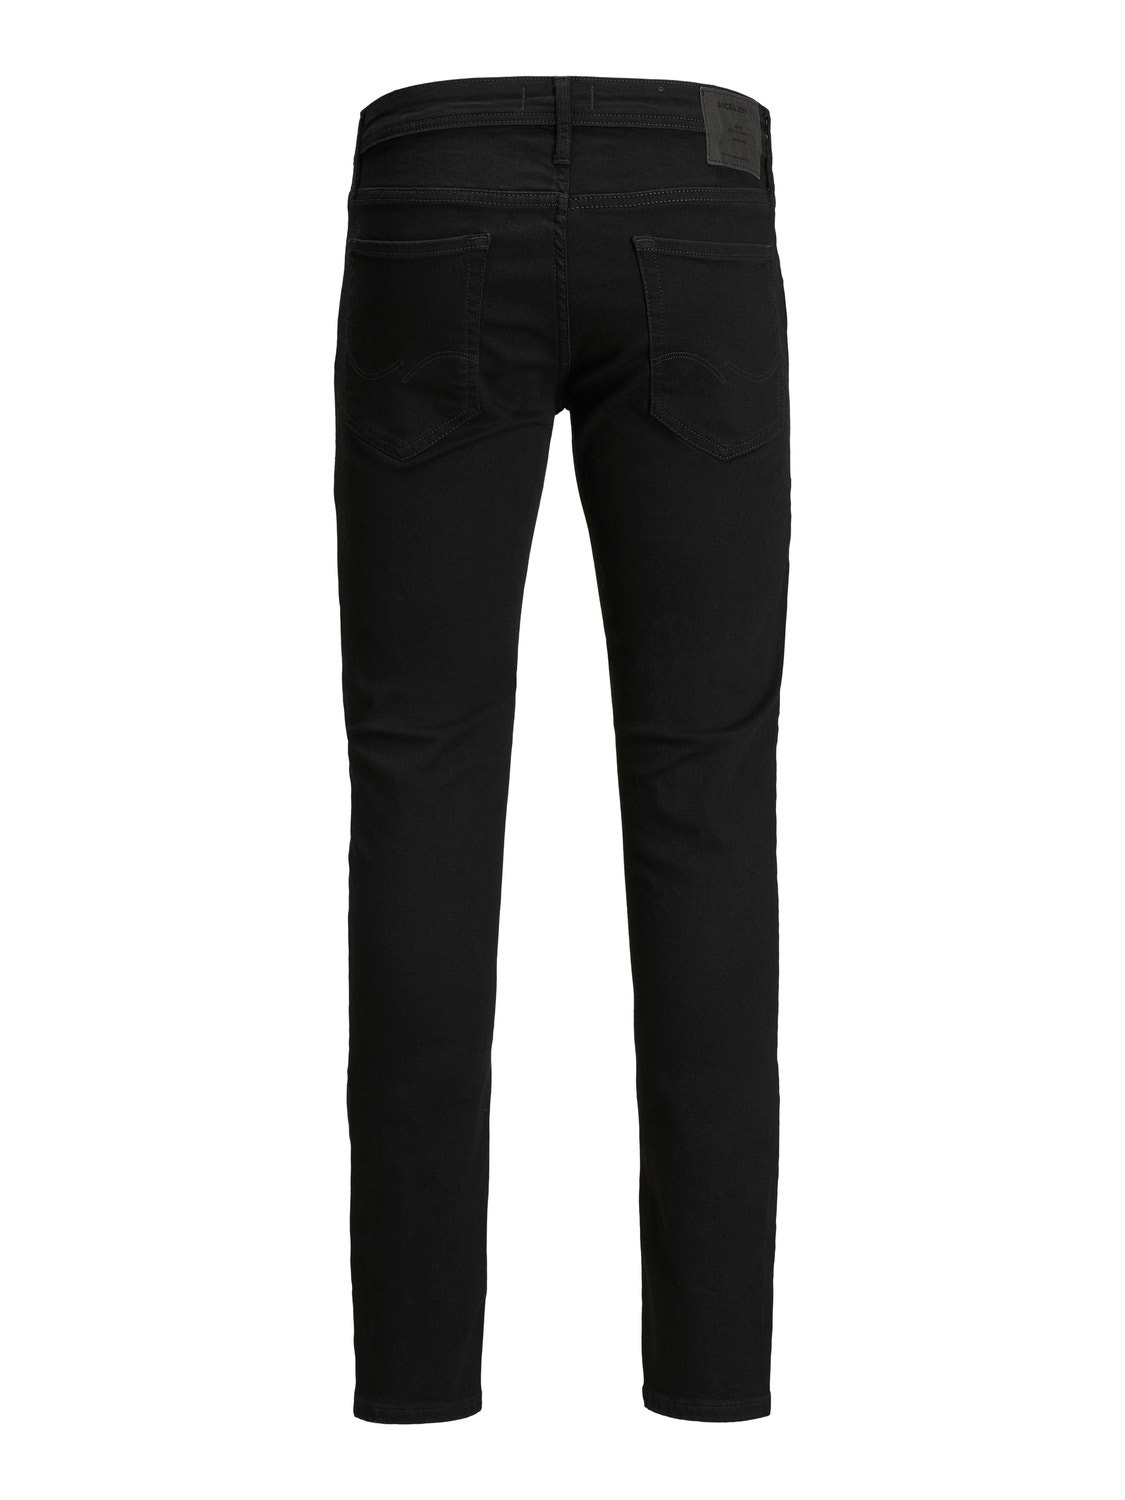 GLENN ORIGINAL AM 816 Slim fit jeans | Black | Jack & Jones®